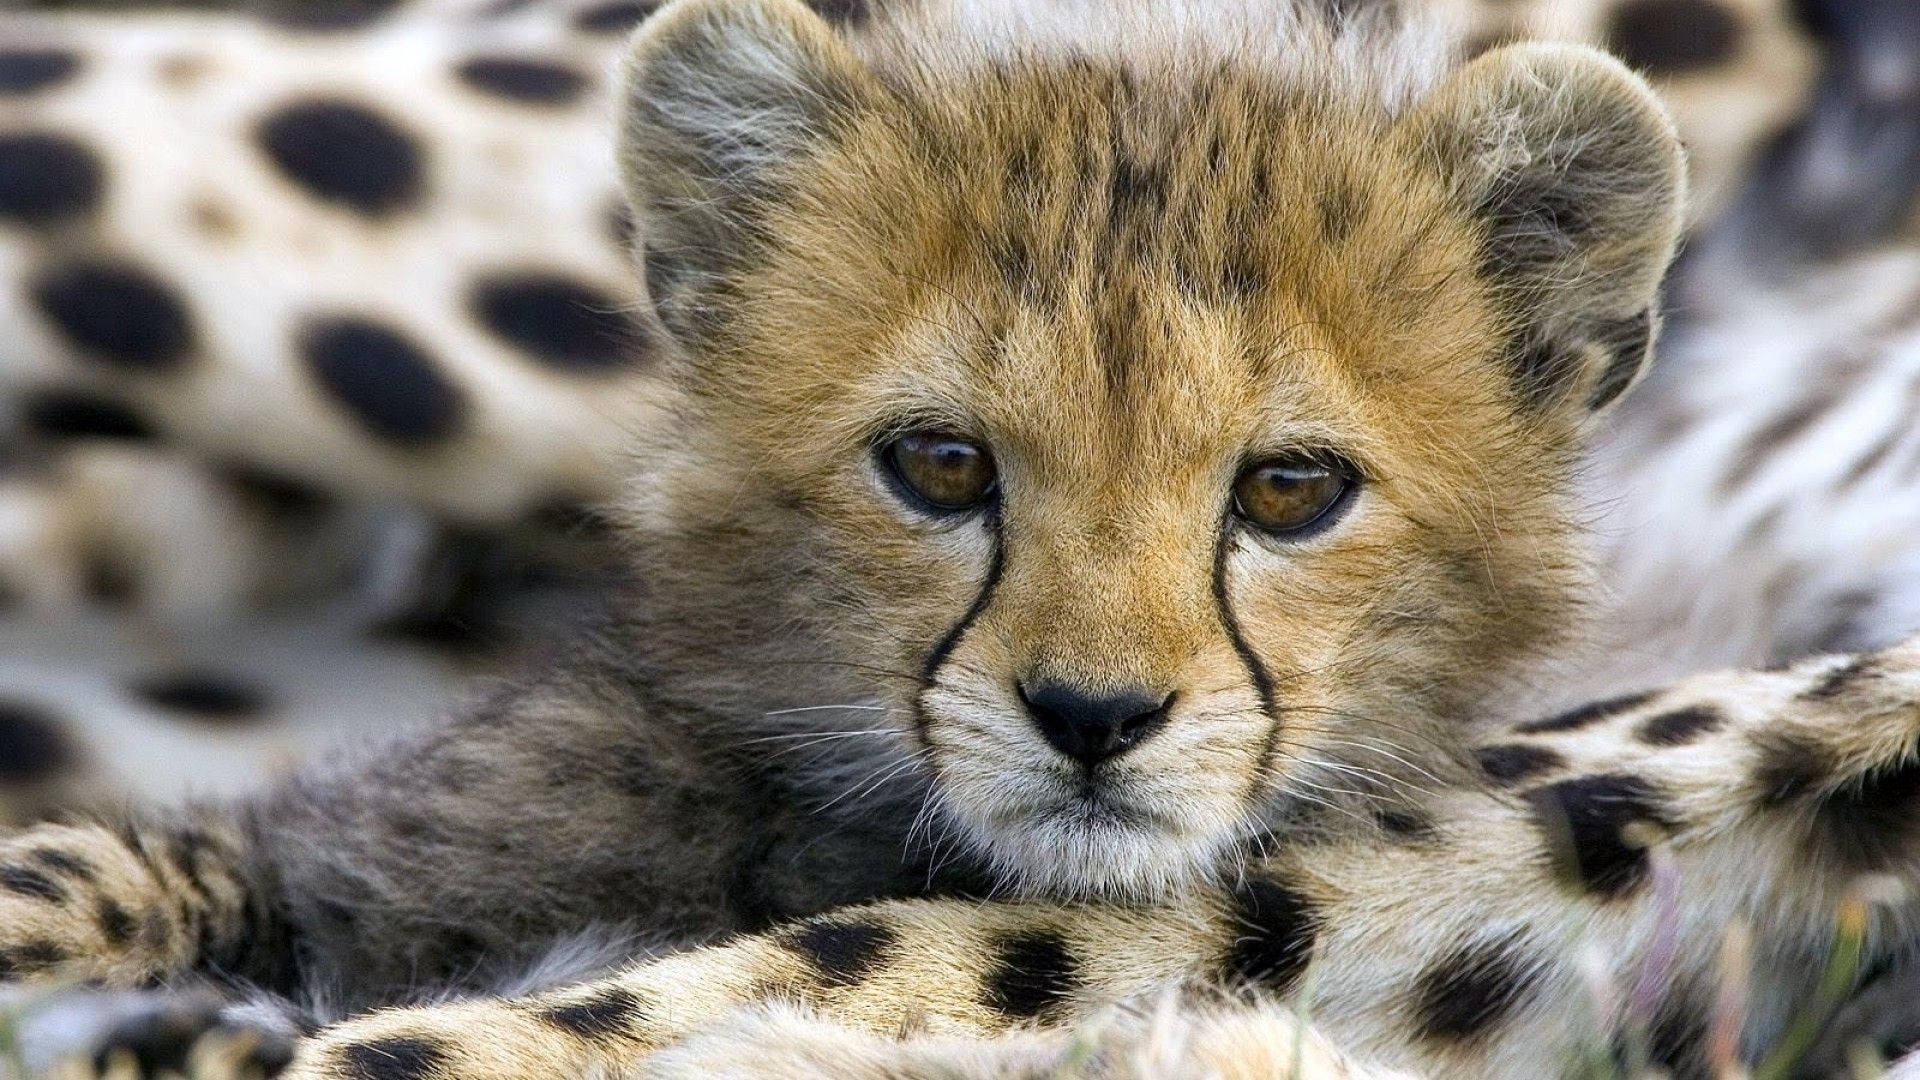 Endearing Baby Cheetah Wallpaper